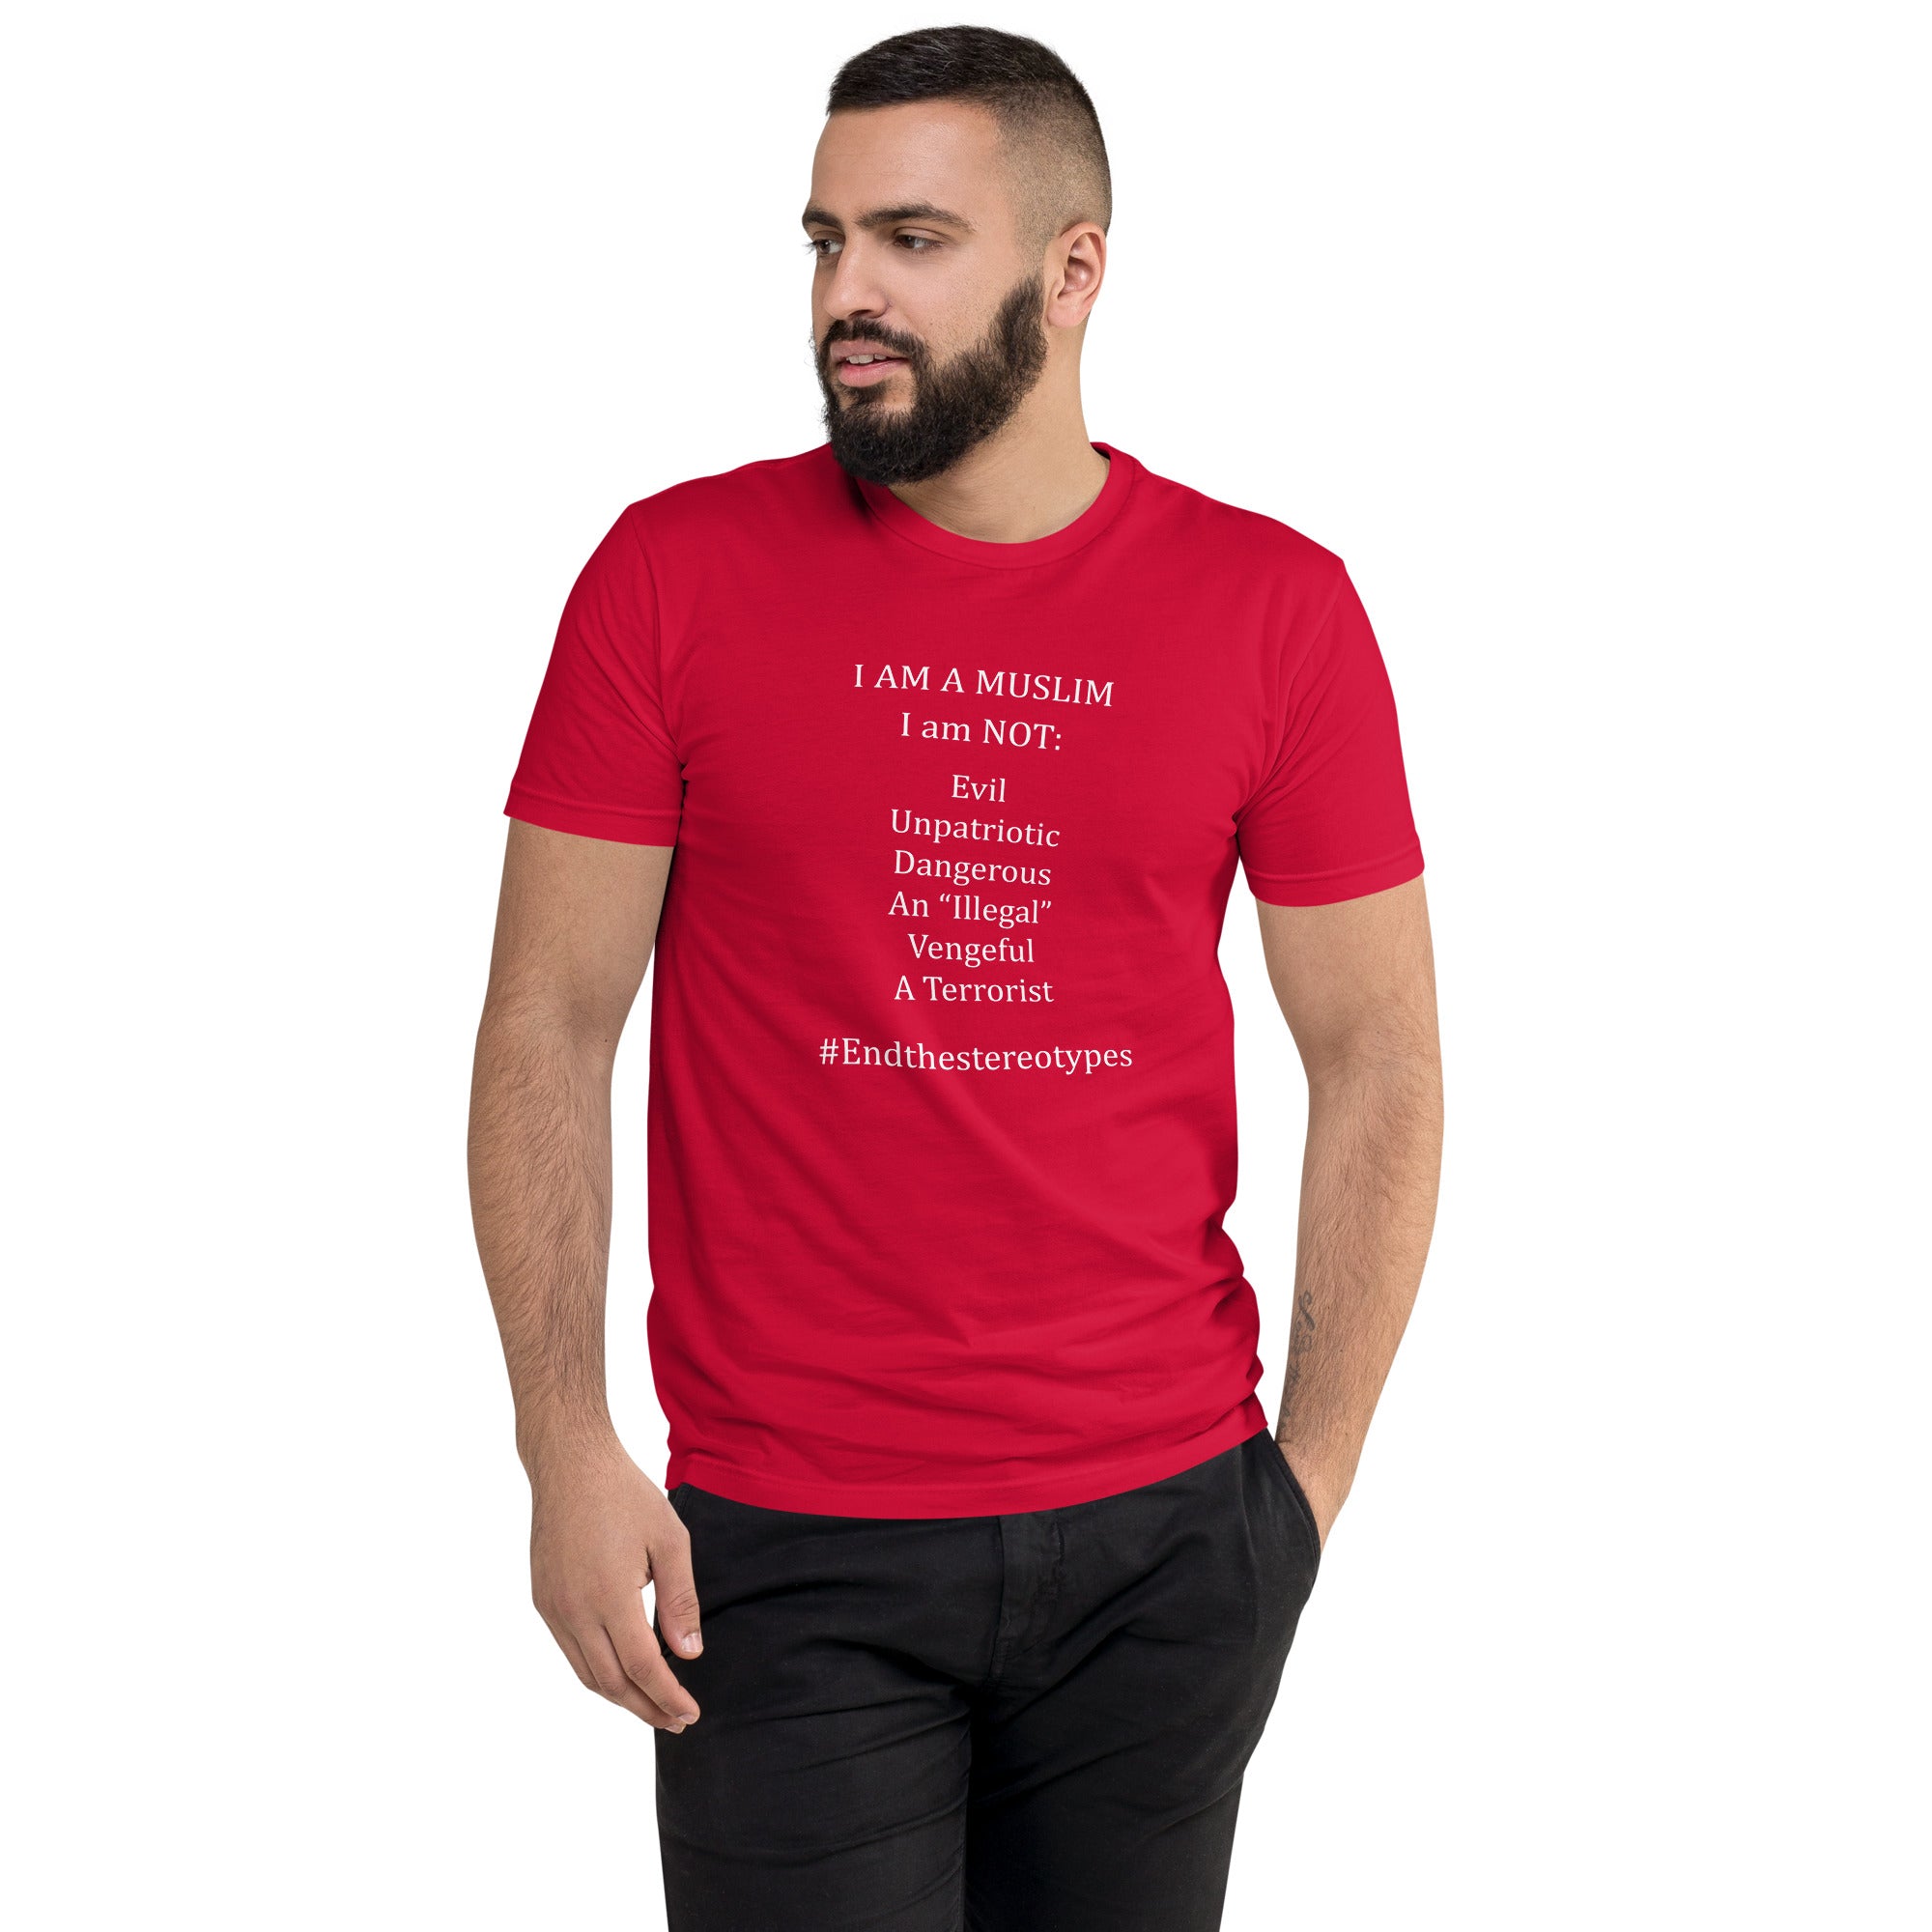 Mean rude cheeky impolite ill-mannered' Men's Premium T-Shirt